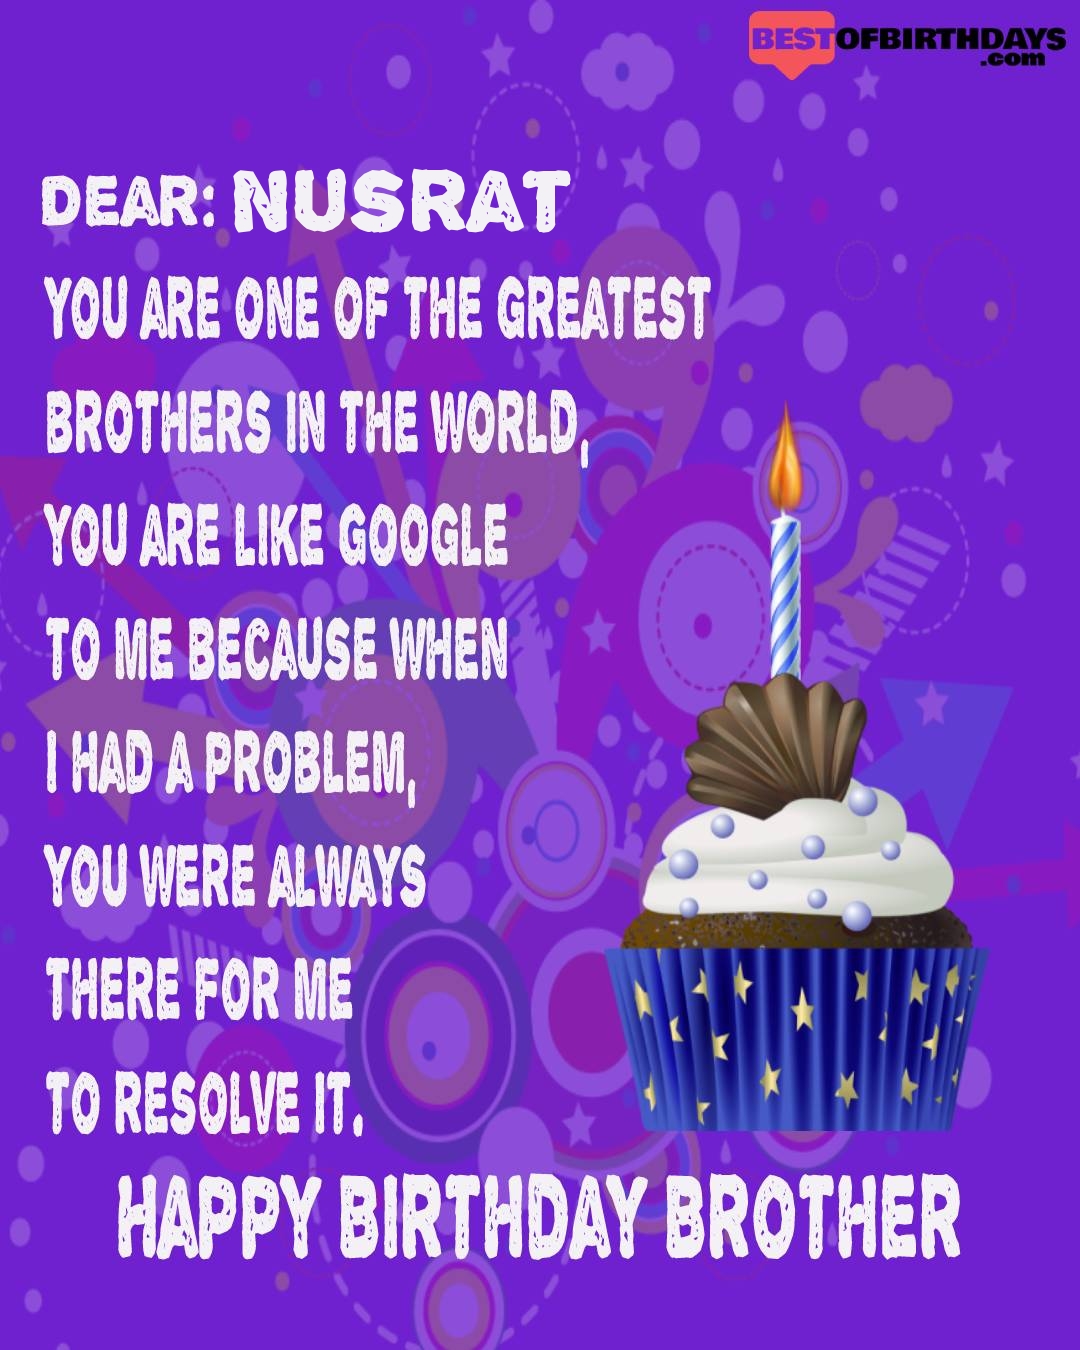 Happy birthday nusrat bhai brother bro